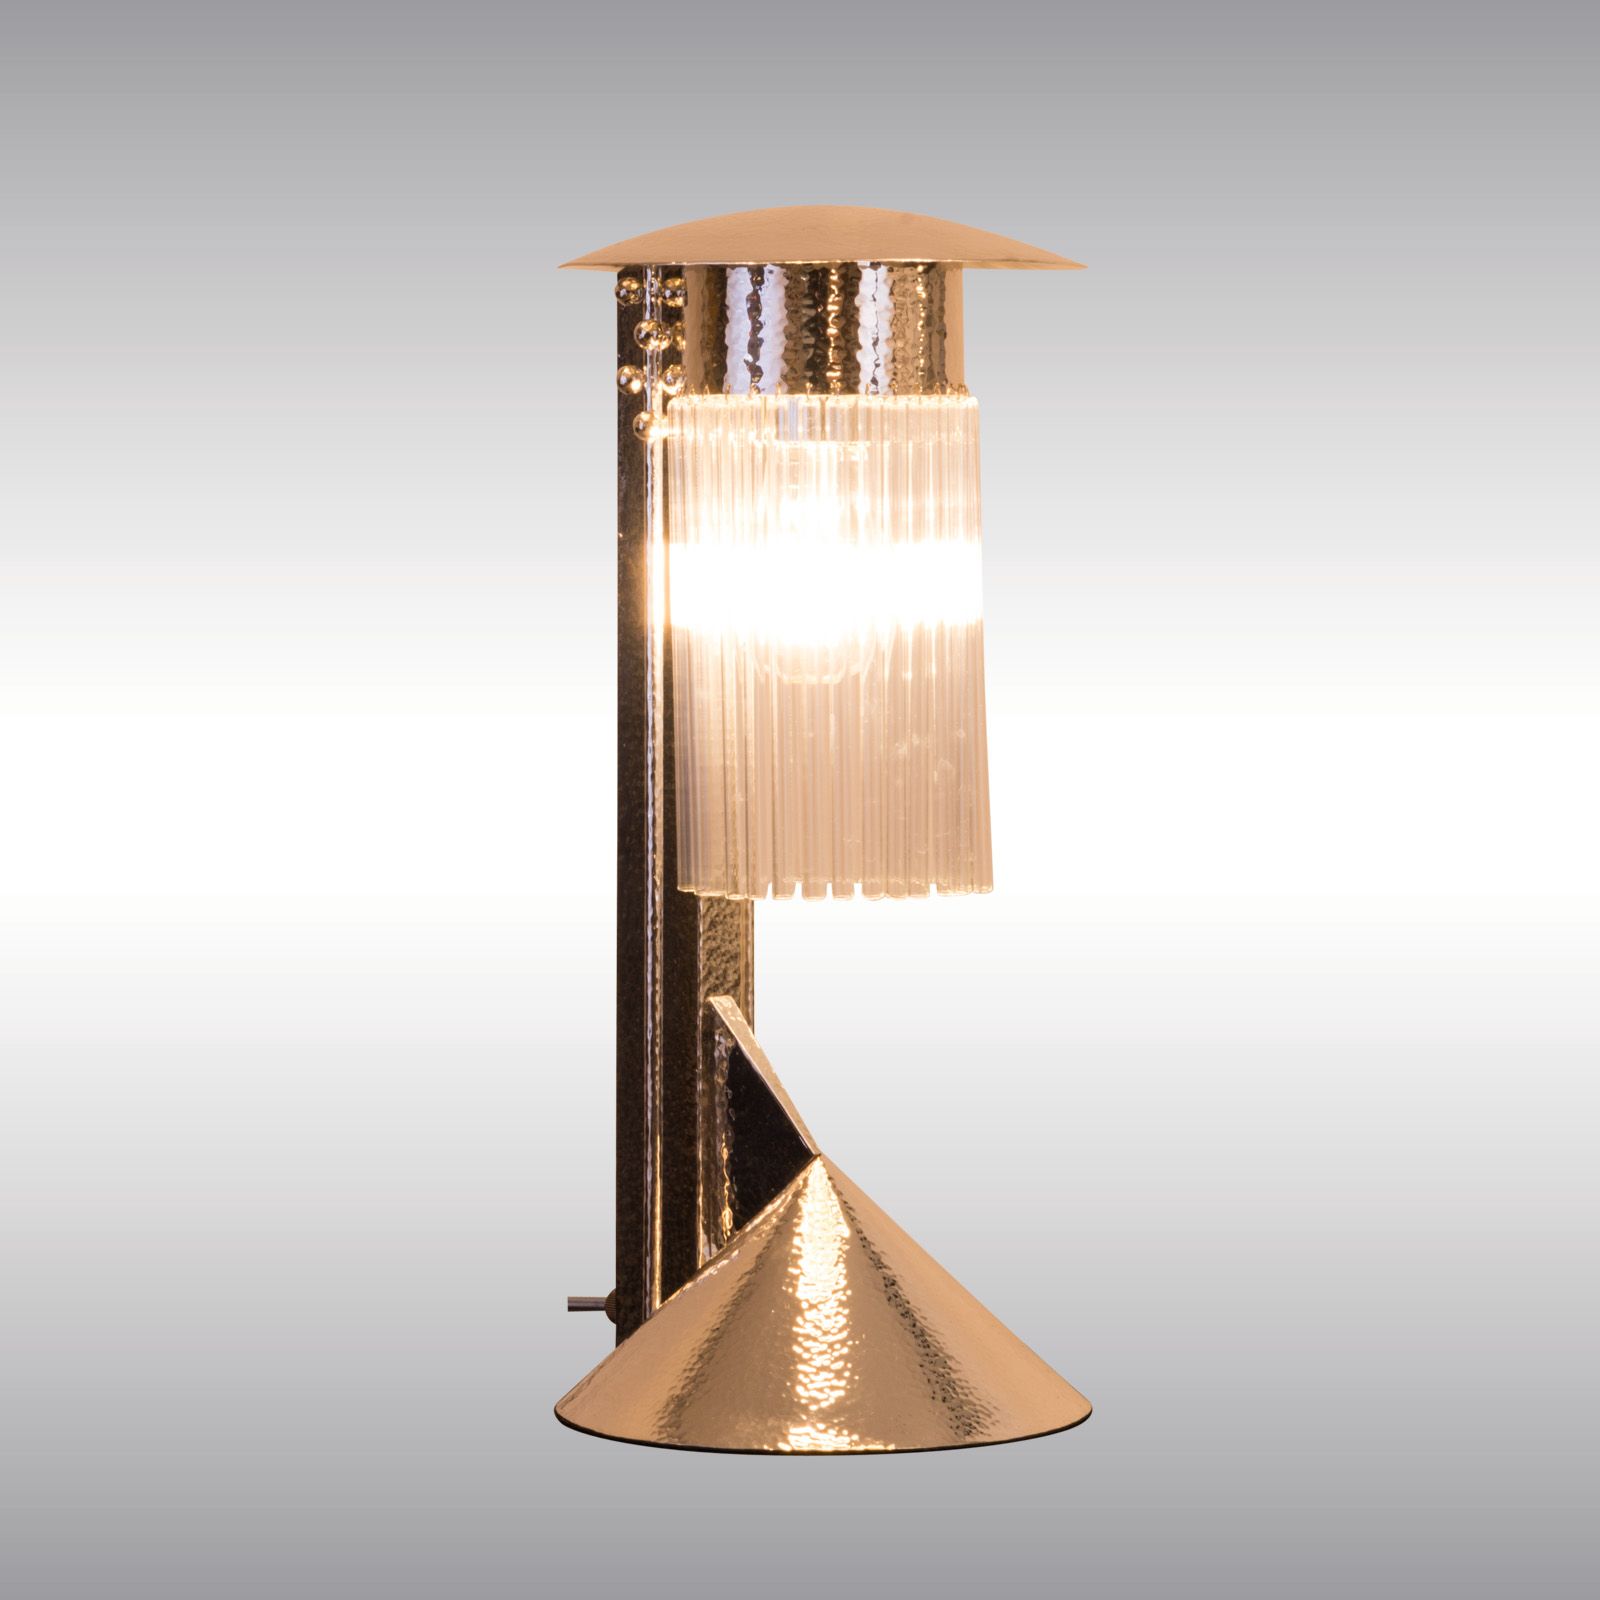 WOKA LAMPS VIENNA - OrderNr.: 22309|Kolo Moser Desk Lamp Reininghaus - Design: Koloman (Kolo) Moser